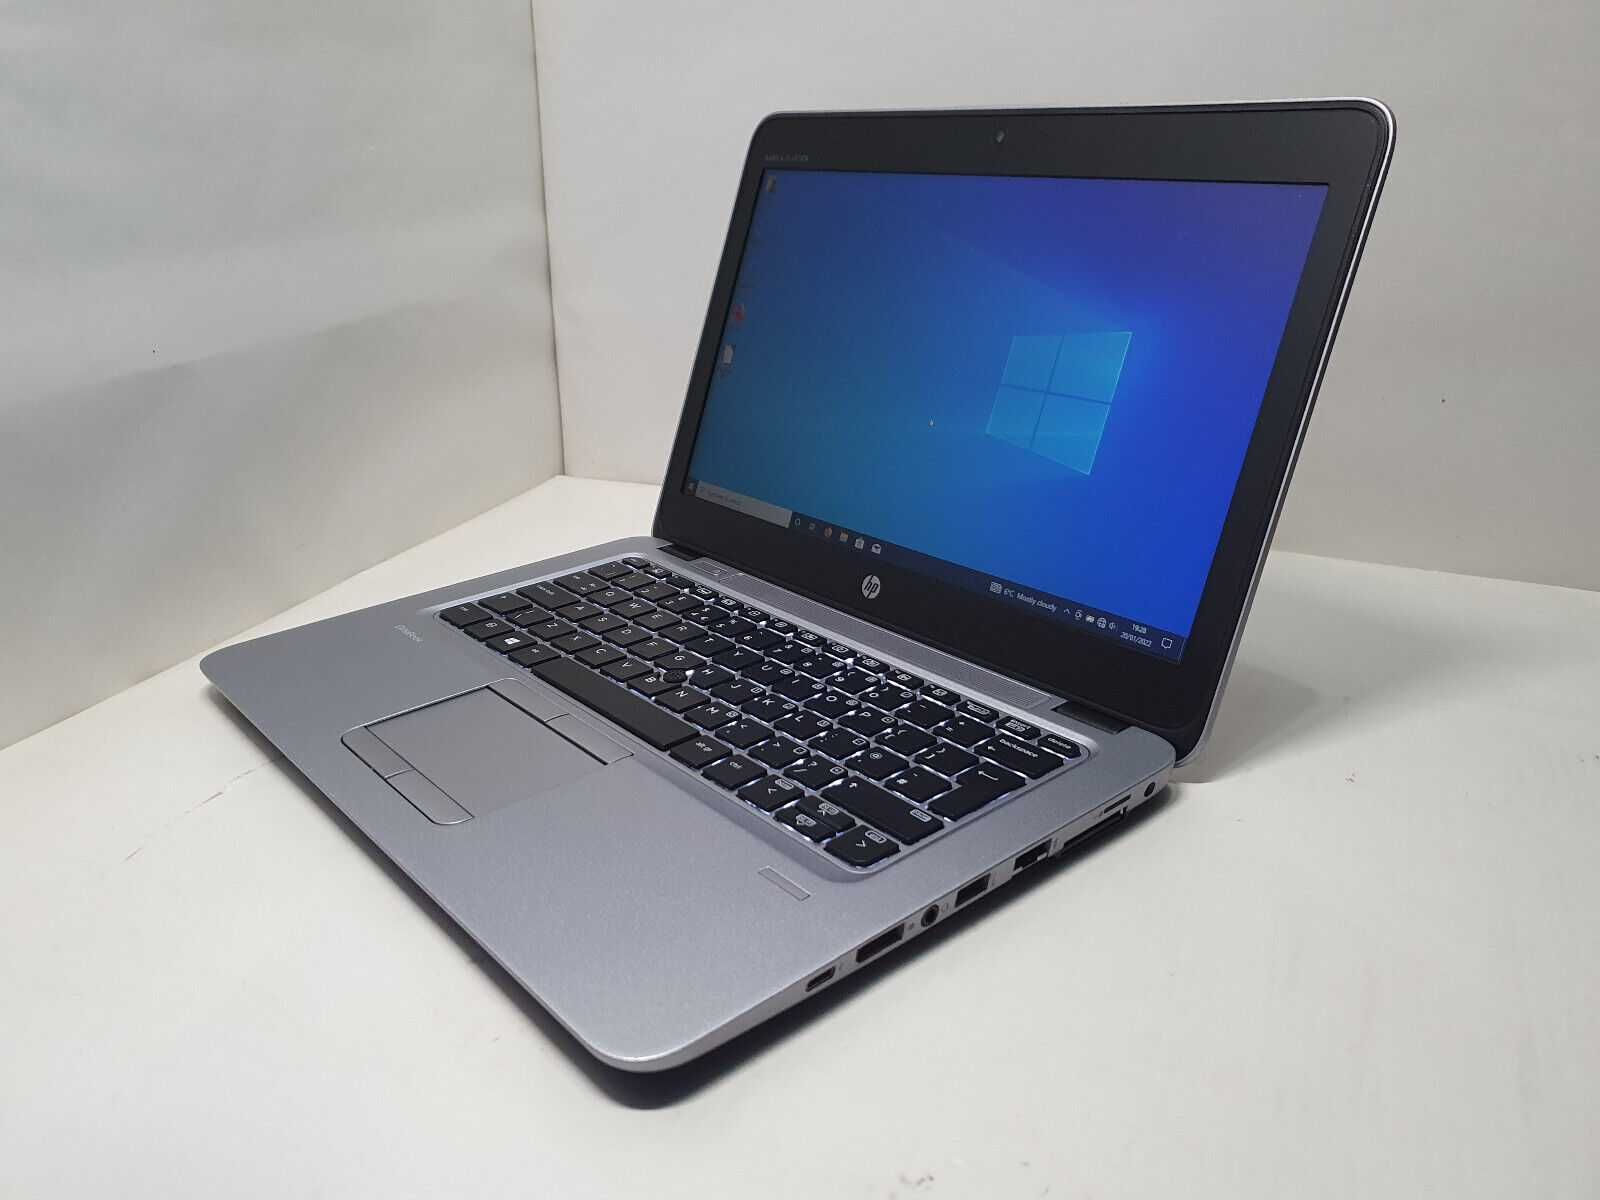 Лаптоп HP 820 G4 I5-7200U 8GB 256GB SSD 12.5 FULL HD Windows 10